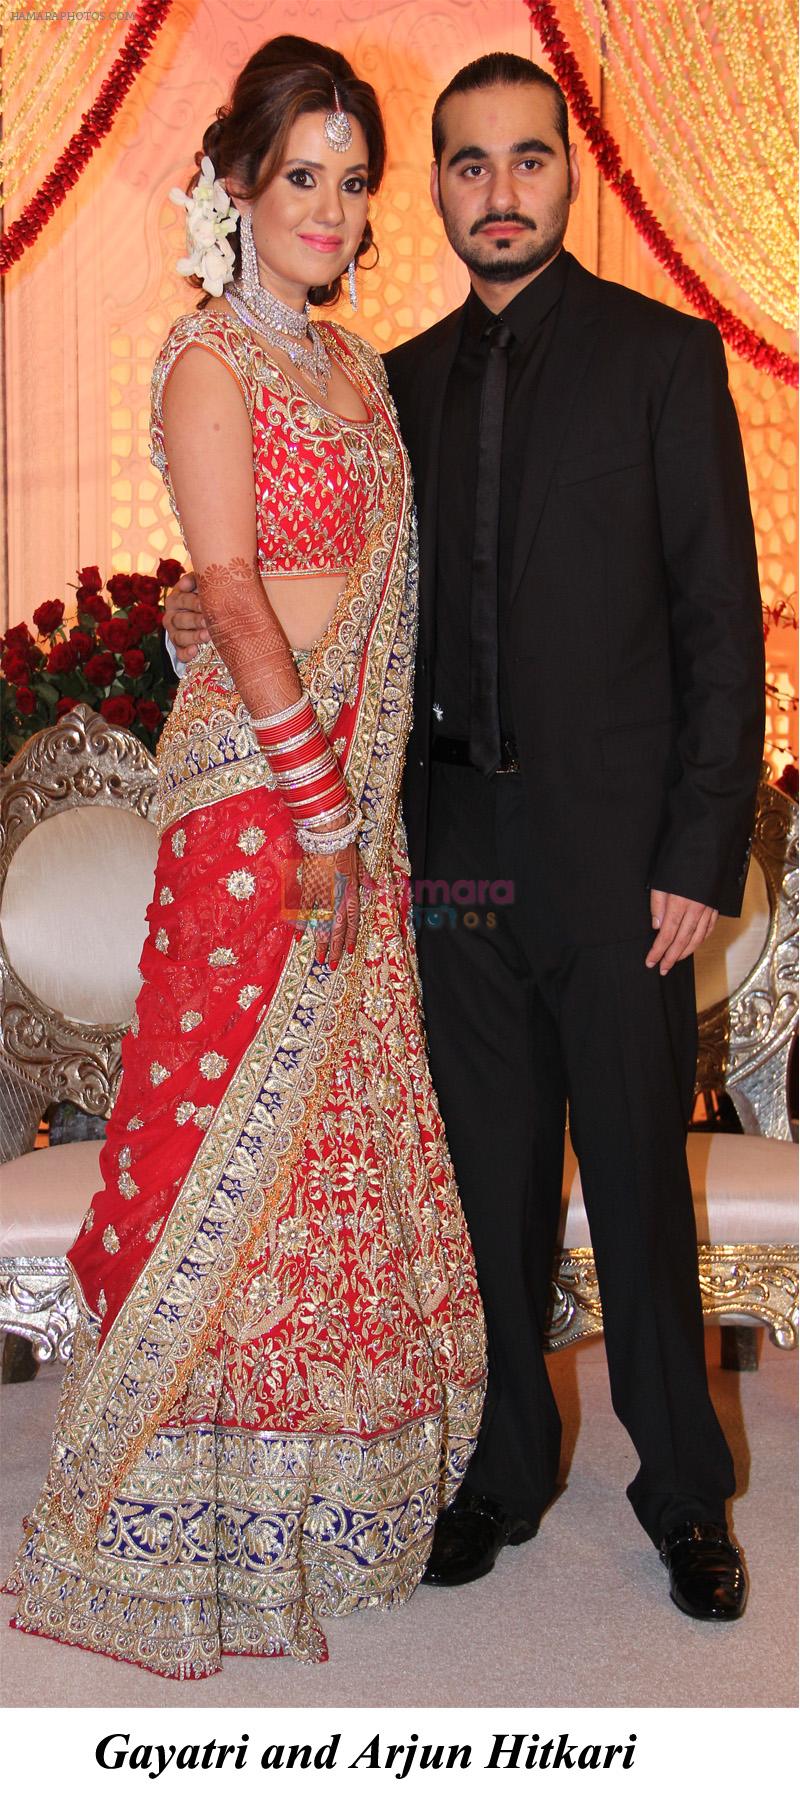 Gayatri and Arjun Hitkari at The wedding reception of Gayatri and Arjun Hitkari hosted by Debbie and Arun Hitkari in Taj, Colaba, Mumbai on 20th Jan 2013